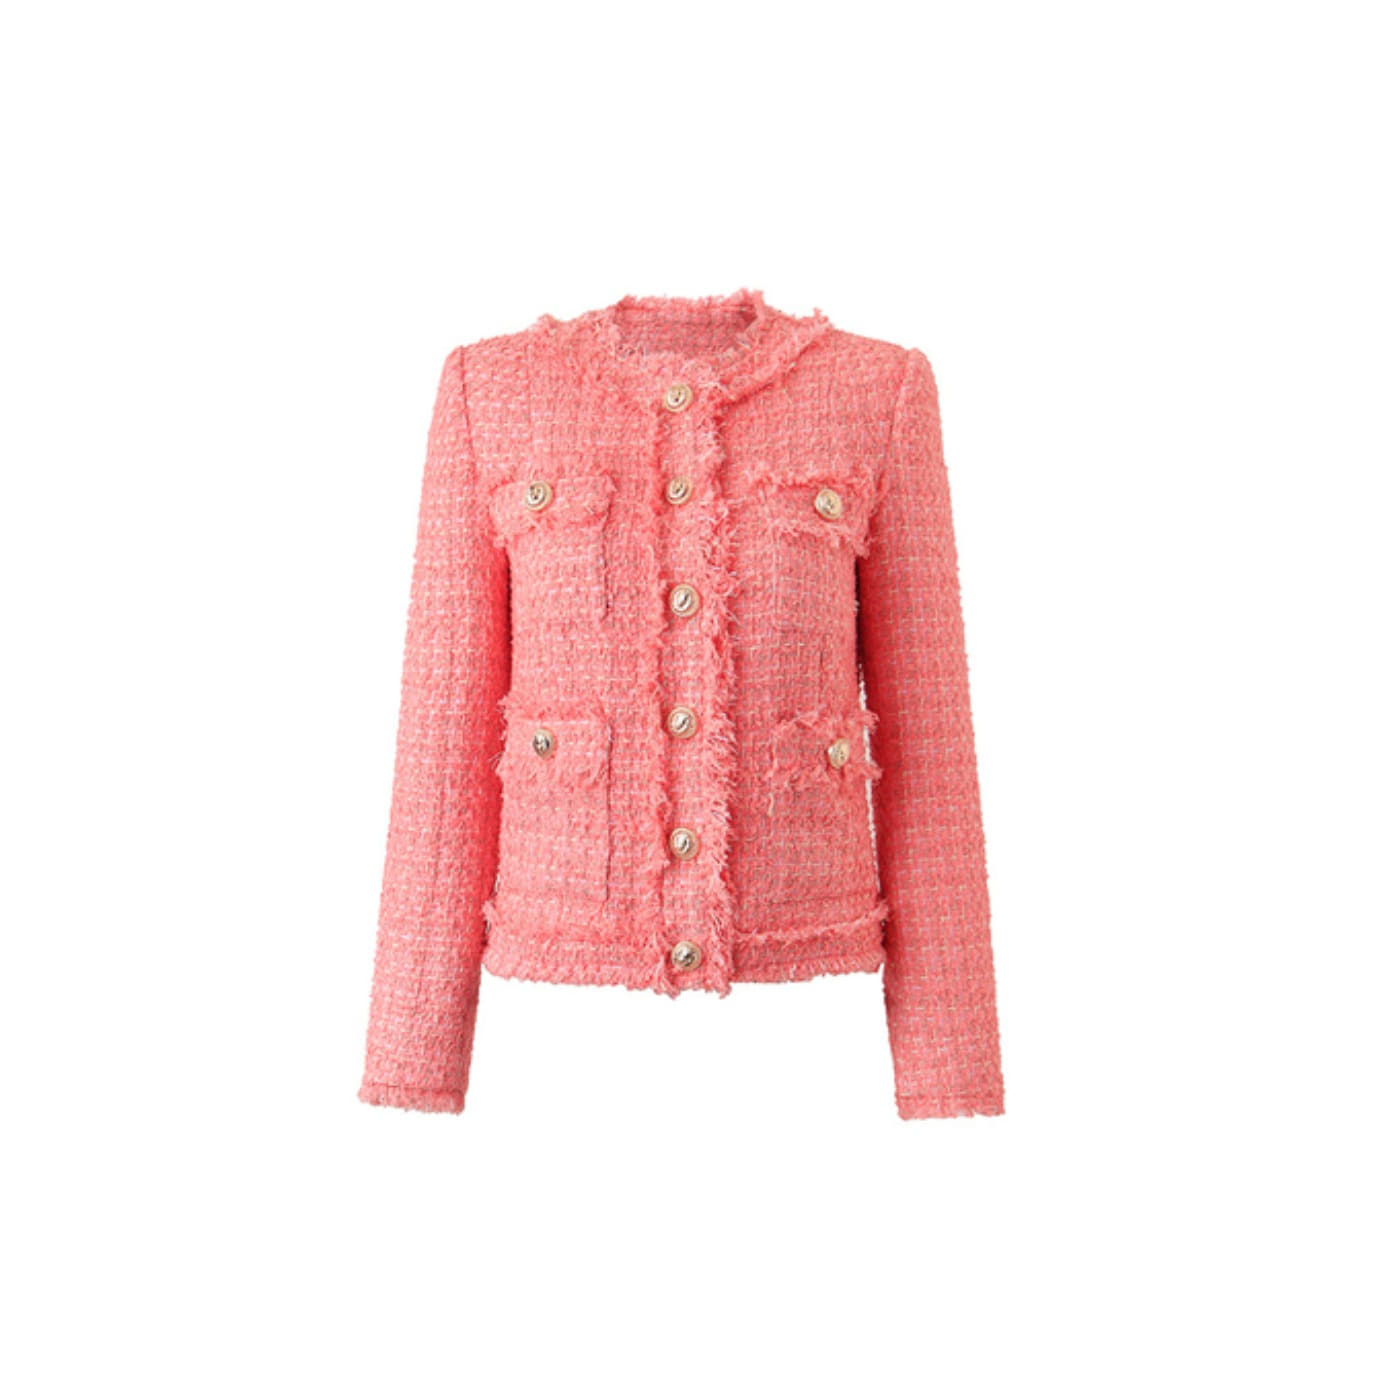 Salmon pink tweed jacket